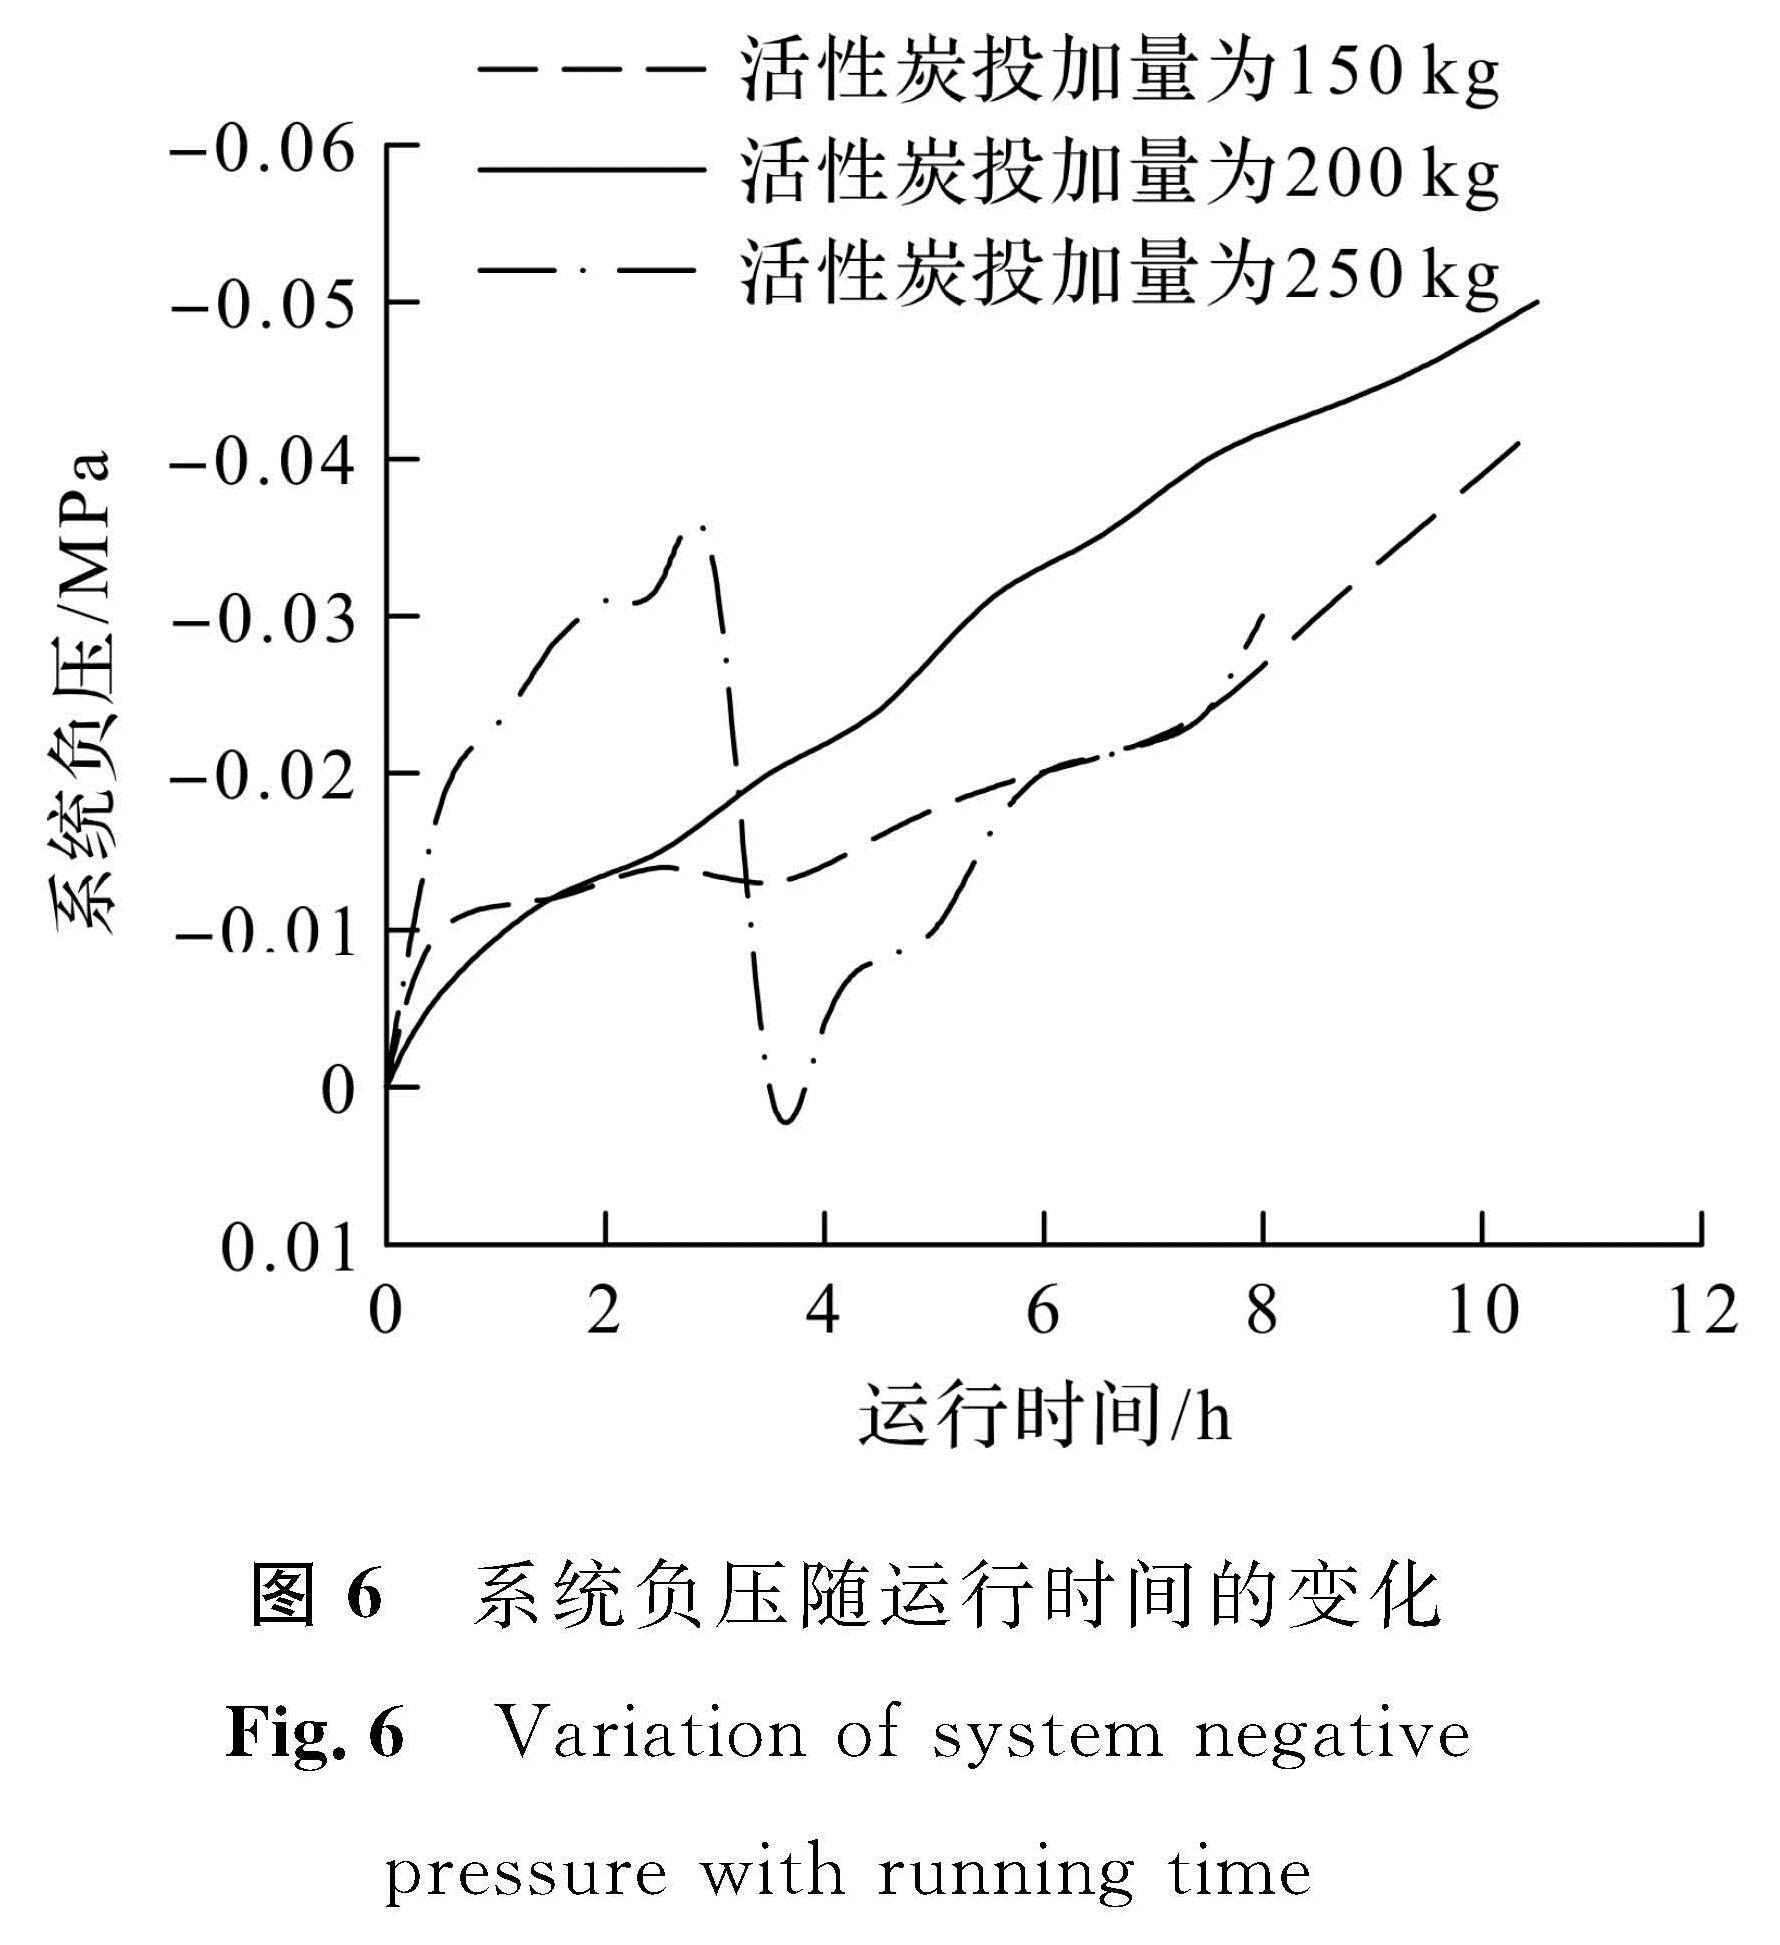 图6 系统负压随运行时间的变化<br/>Fig.6 Variation of system negative pressure with running time